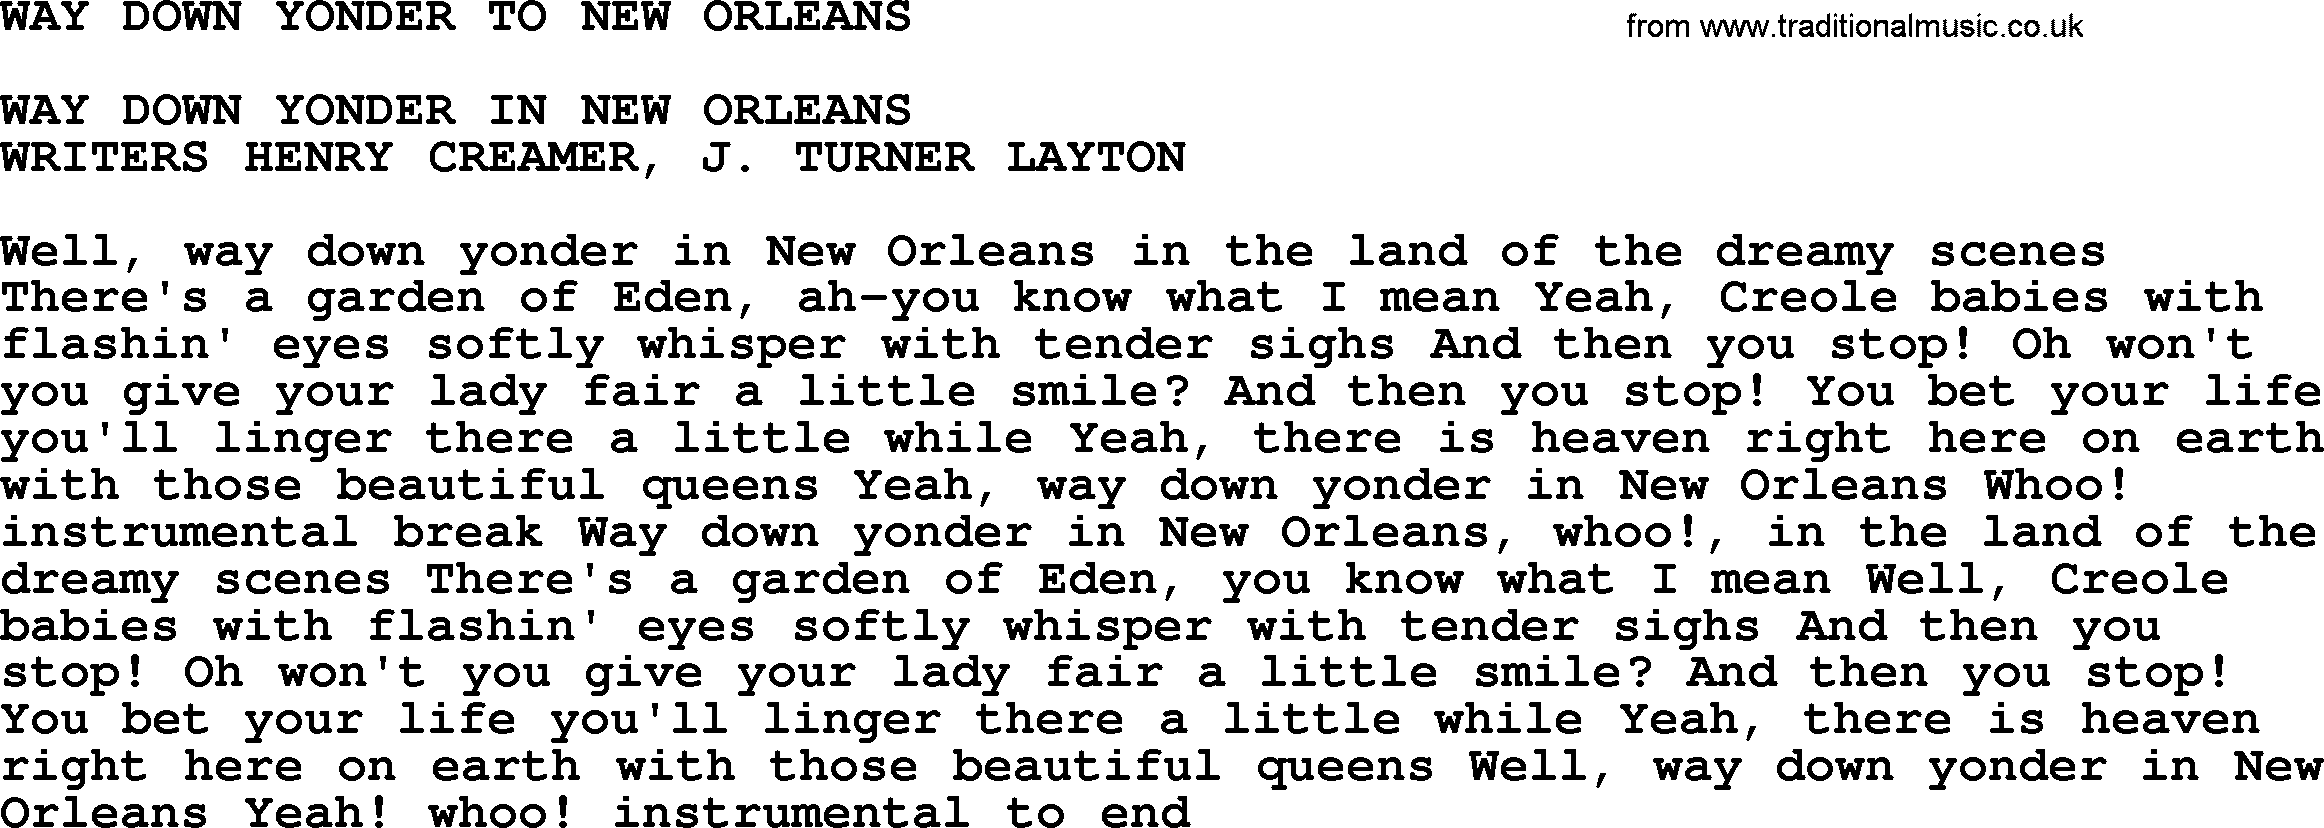 Merle Haggard song: Way Down Yonder To New Orleans, lyrics.